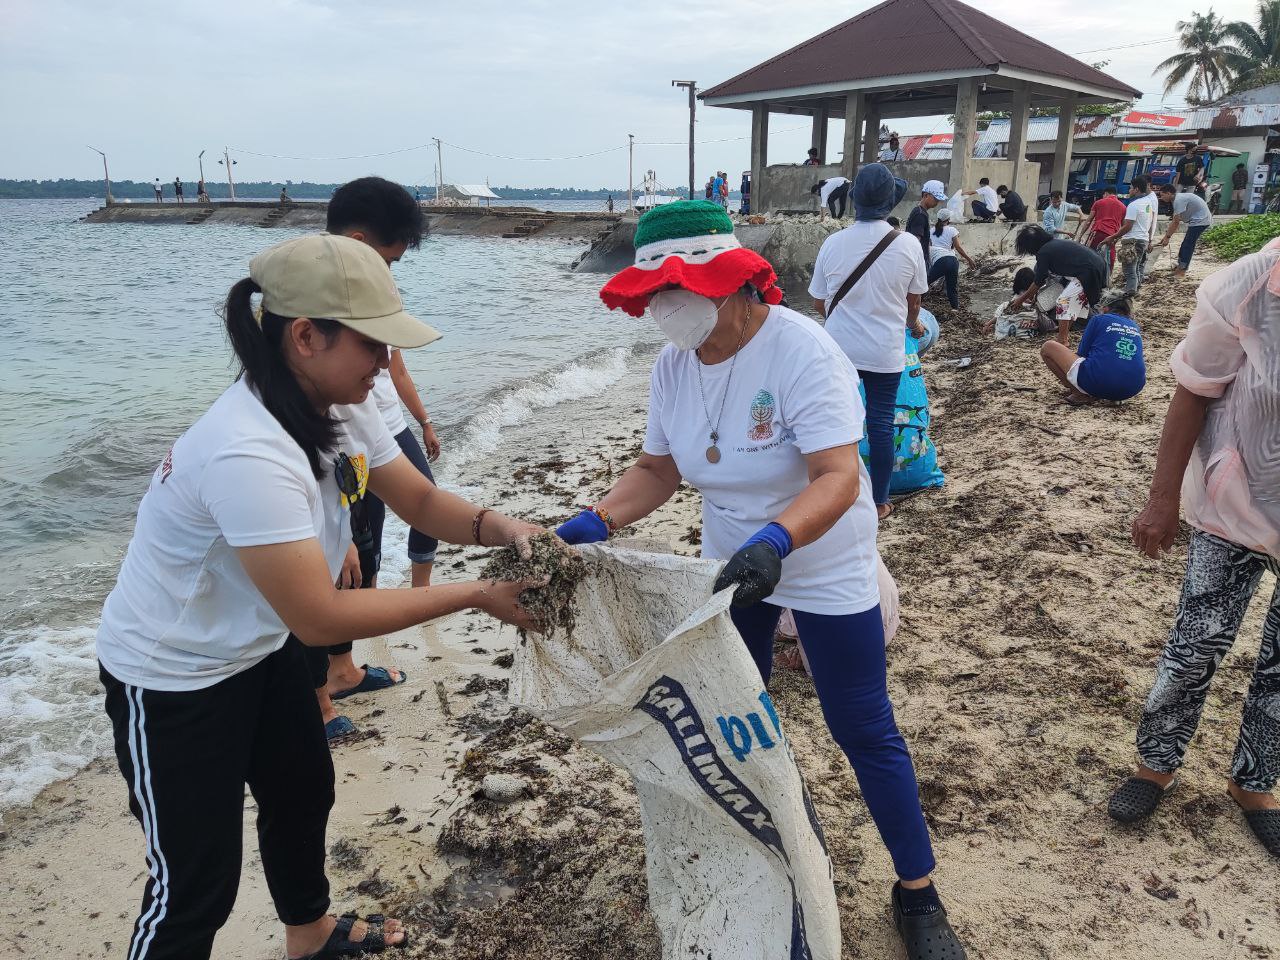 Bohol District helps clean Loon coasts